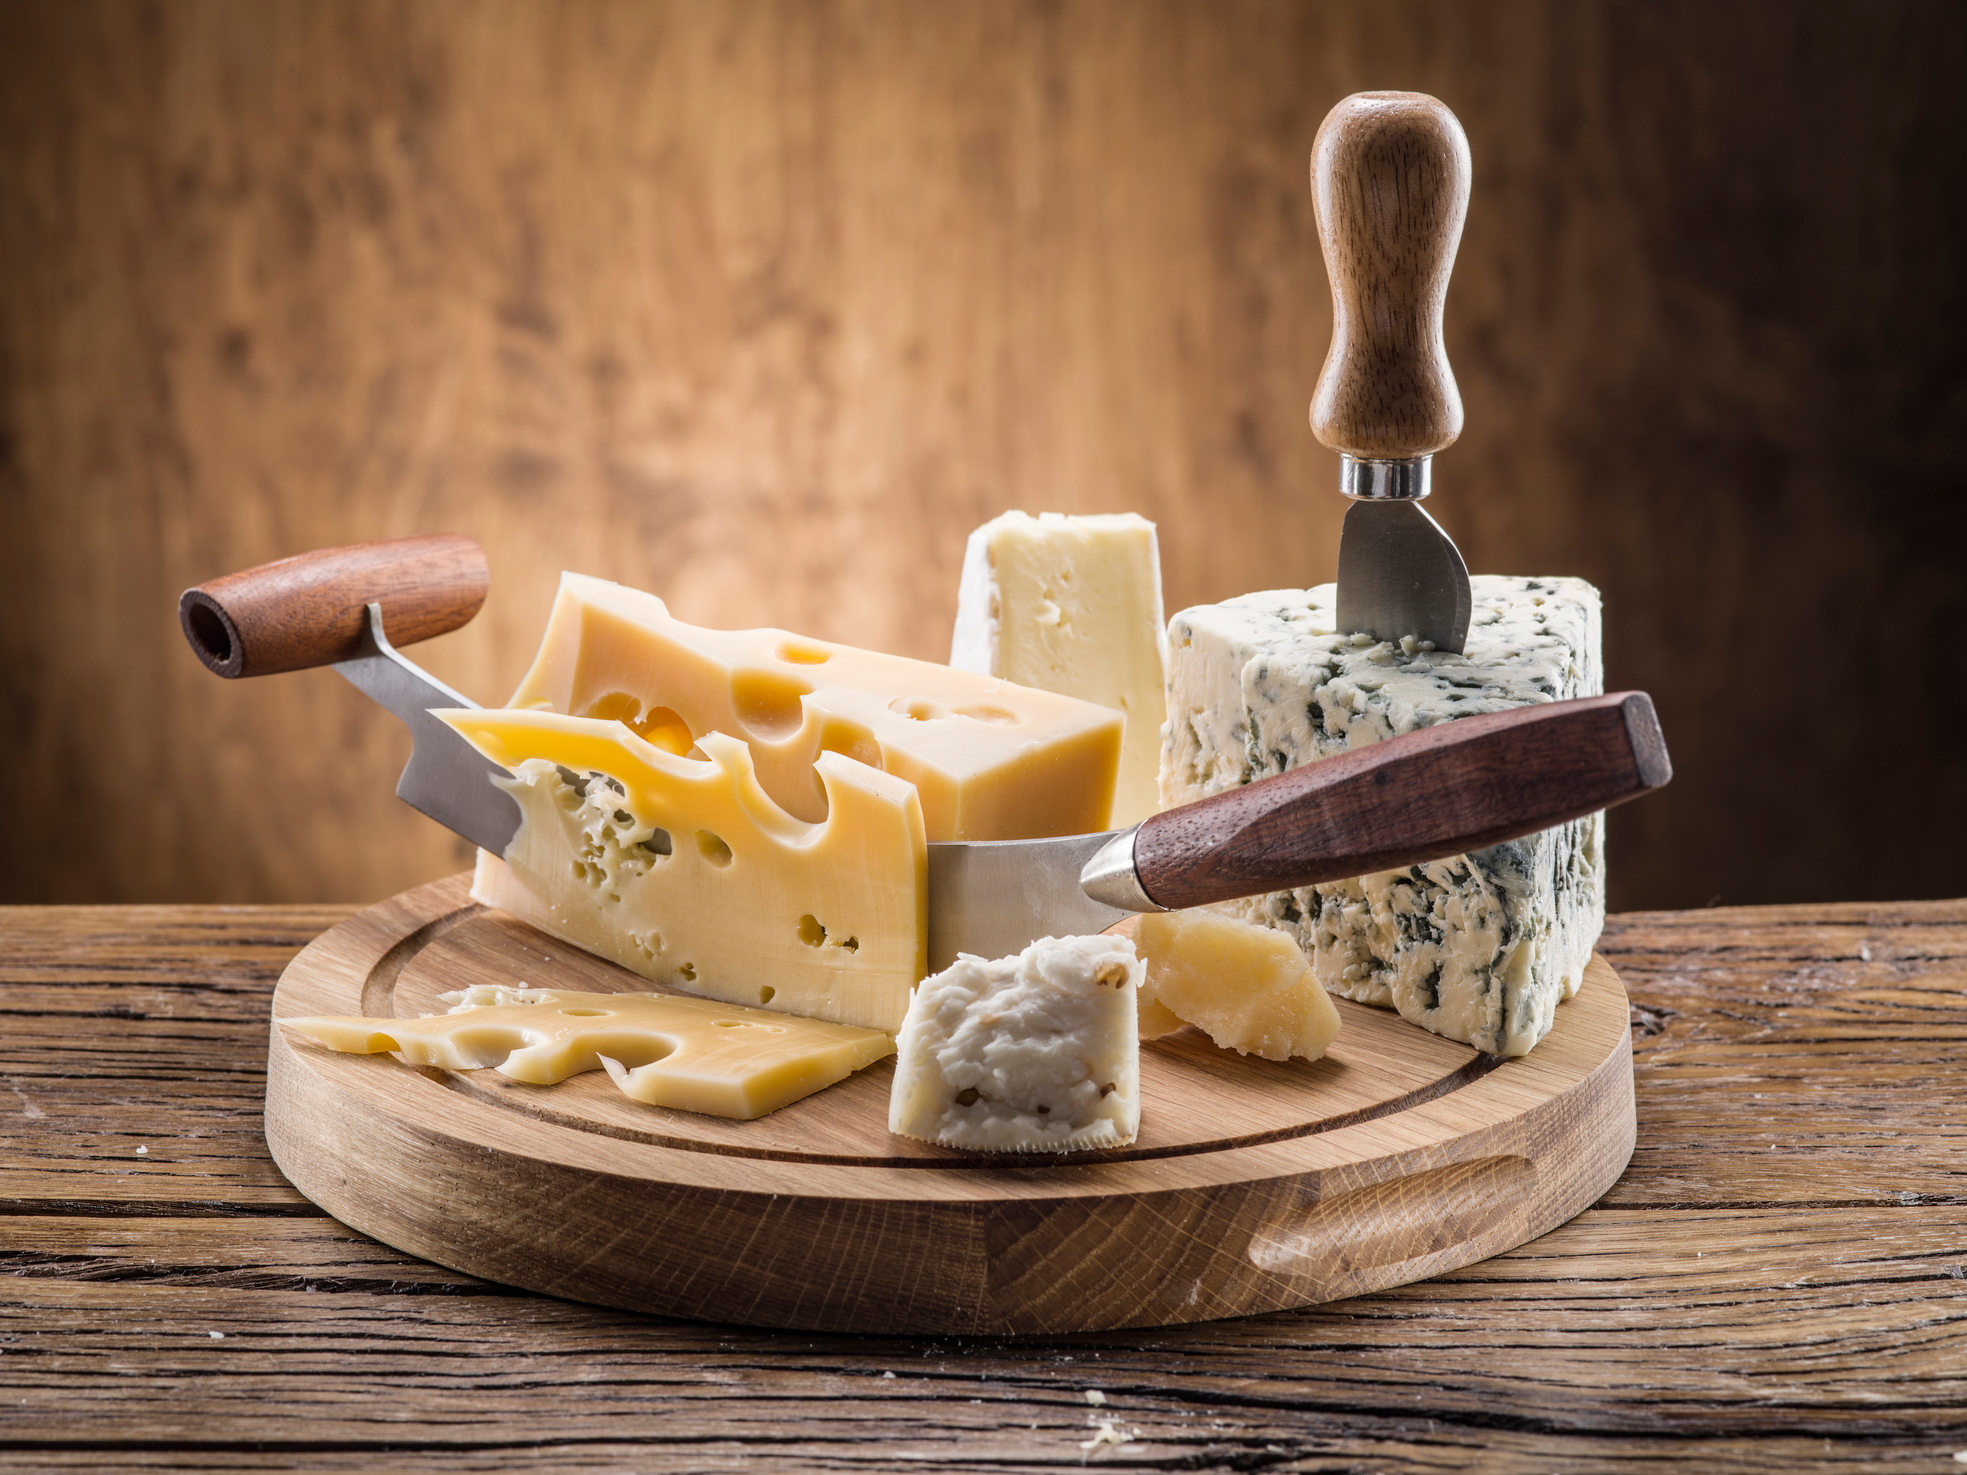 More cheese makes the Mediterranean diet healthier